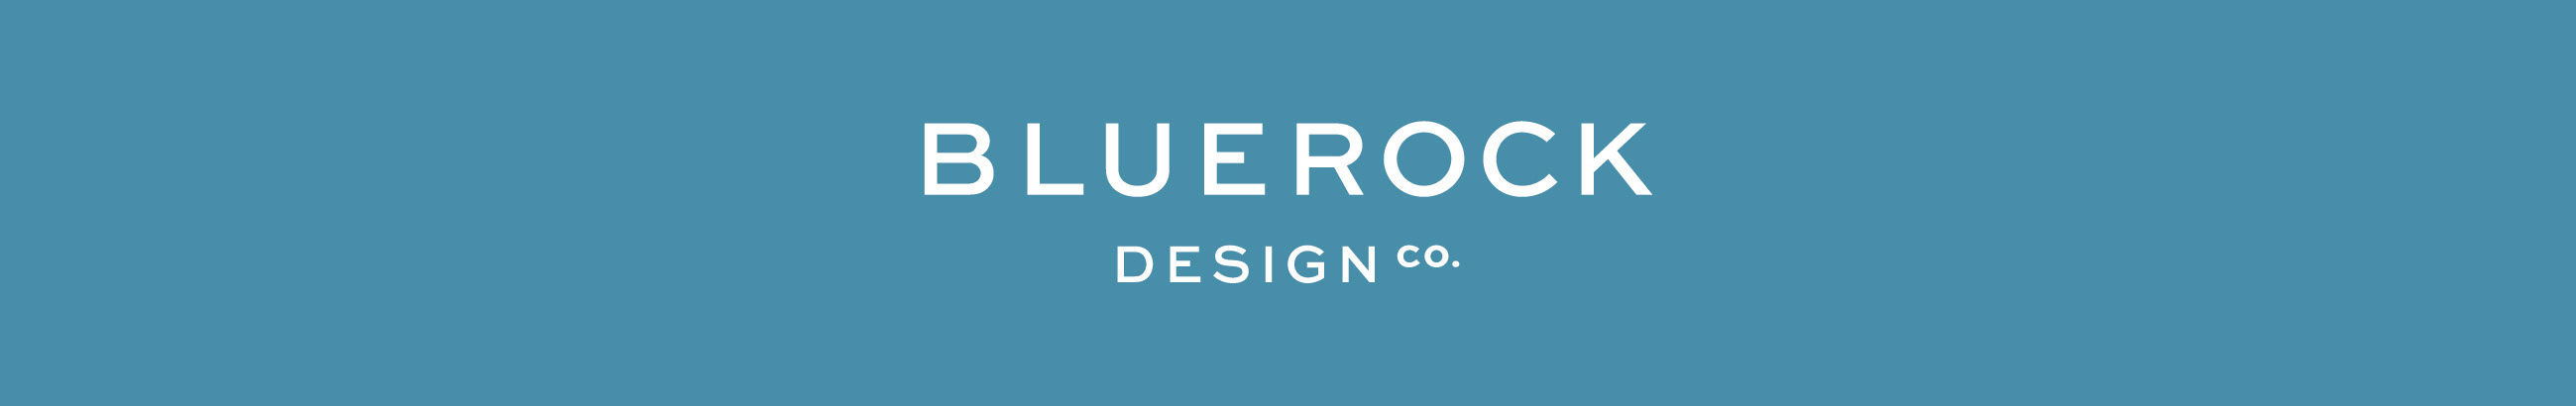 Bluerock Design Co.'s profile banner